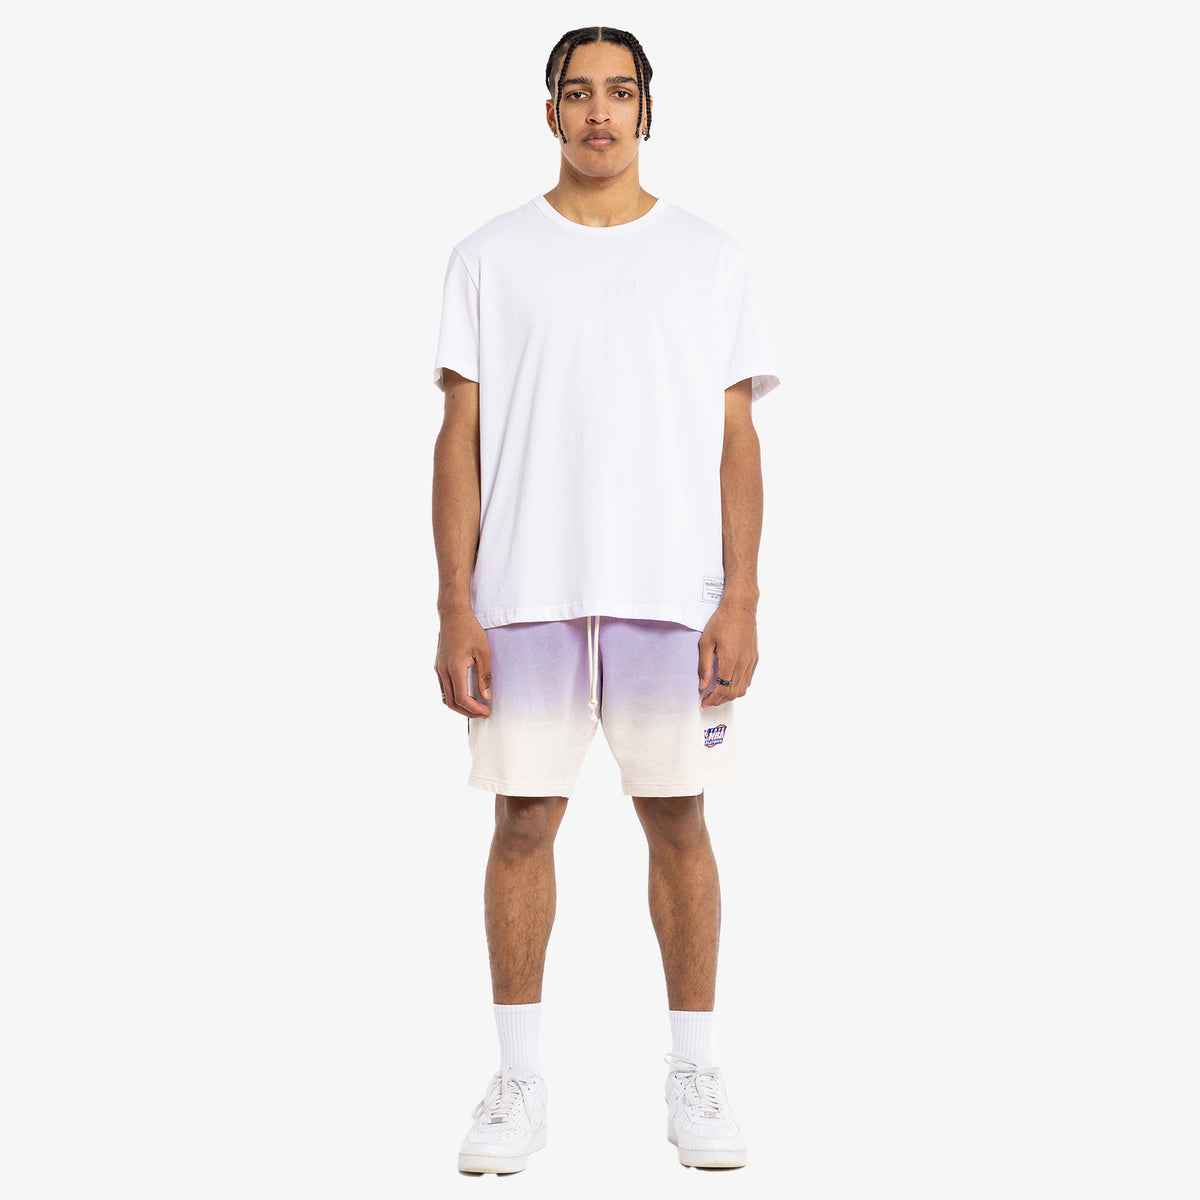 Phoenix Suns Run It Shorts - Purple/Worn White